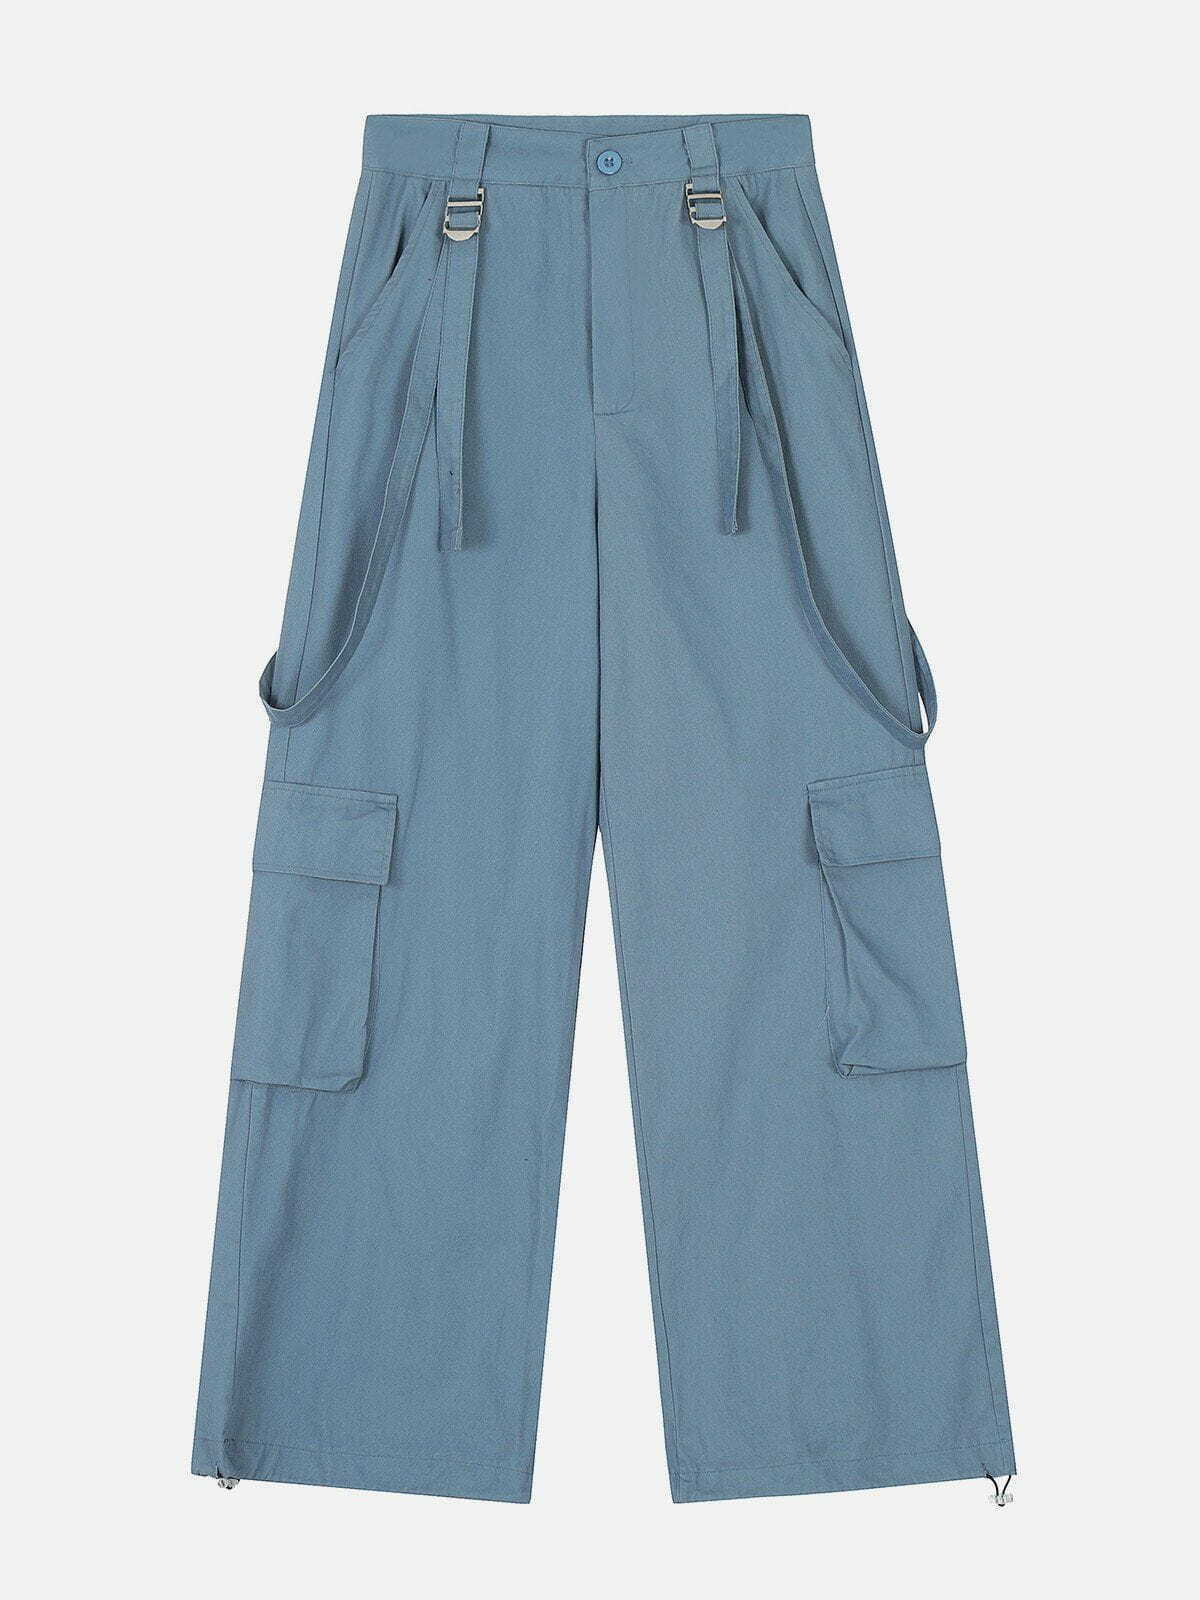 youthful long ribbon cargo pants   big pockets & urban style 1195